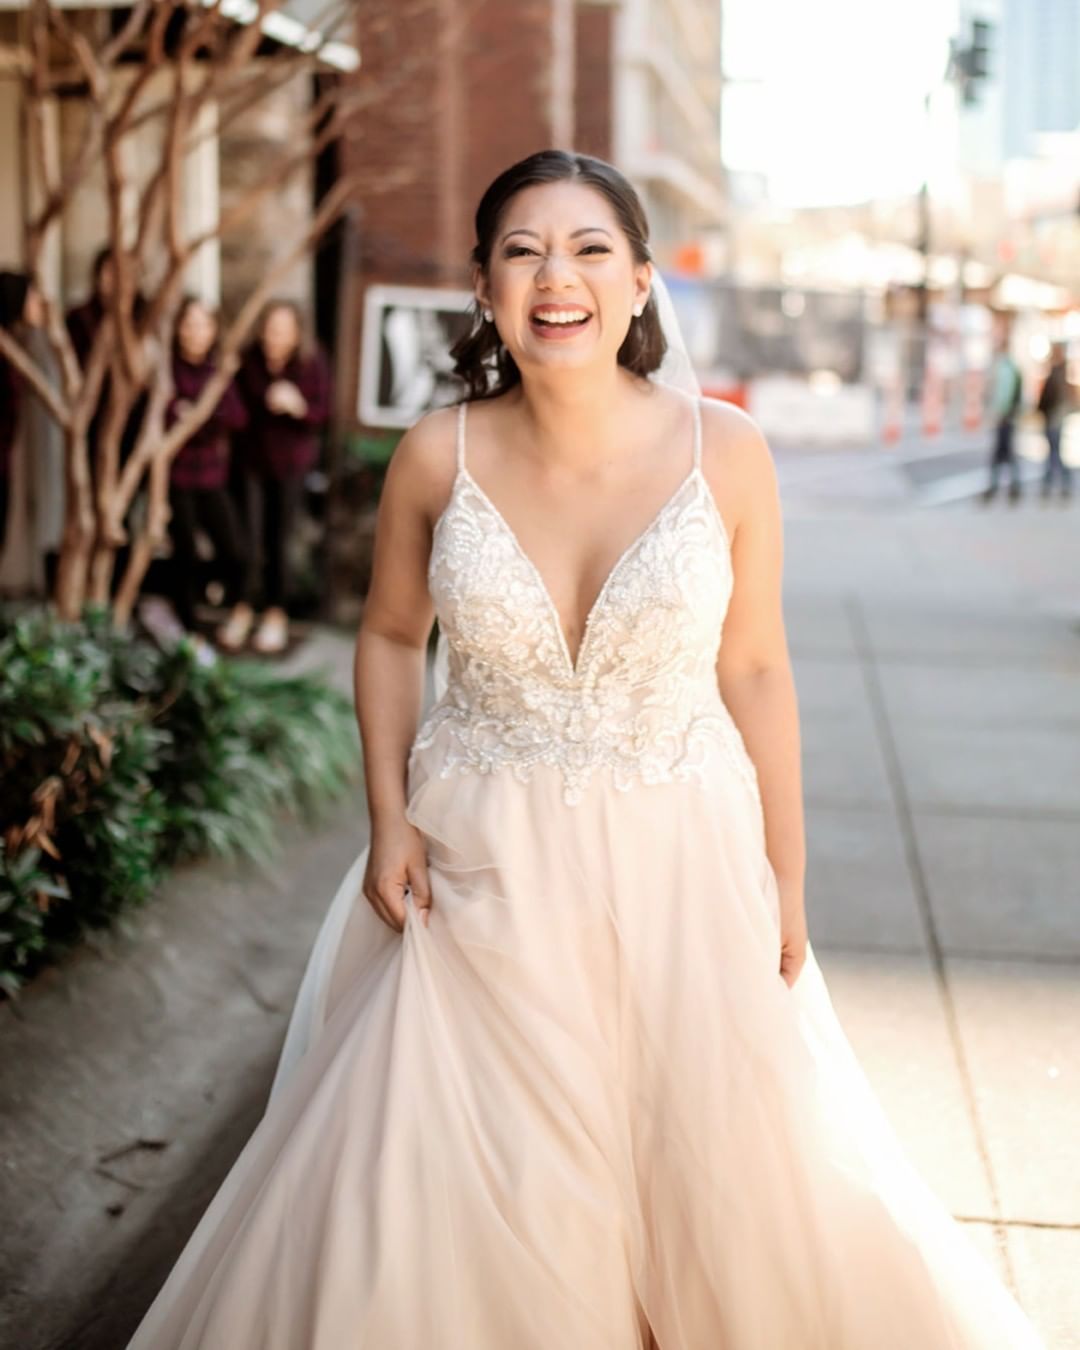 Unique Colorful Wedding Dresses | David's Bridal Blog